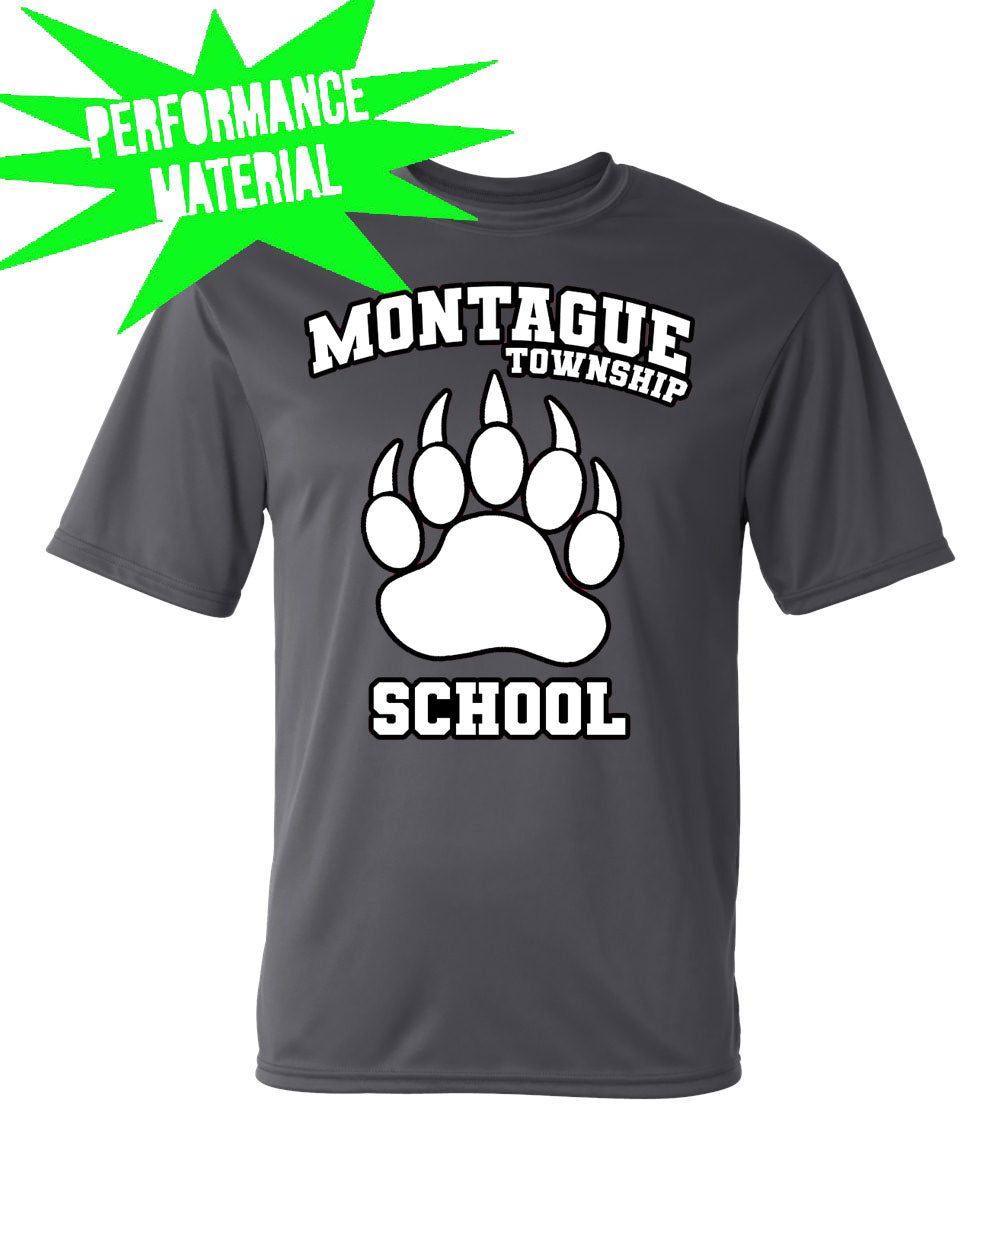 Montague Performance Material Design 2 T-Shirt